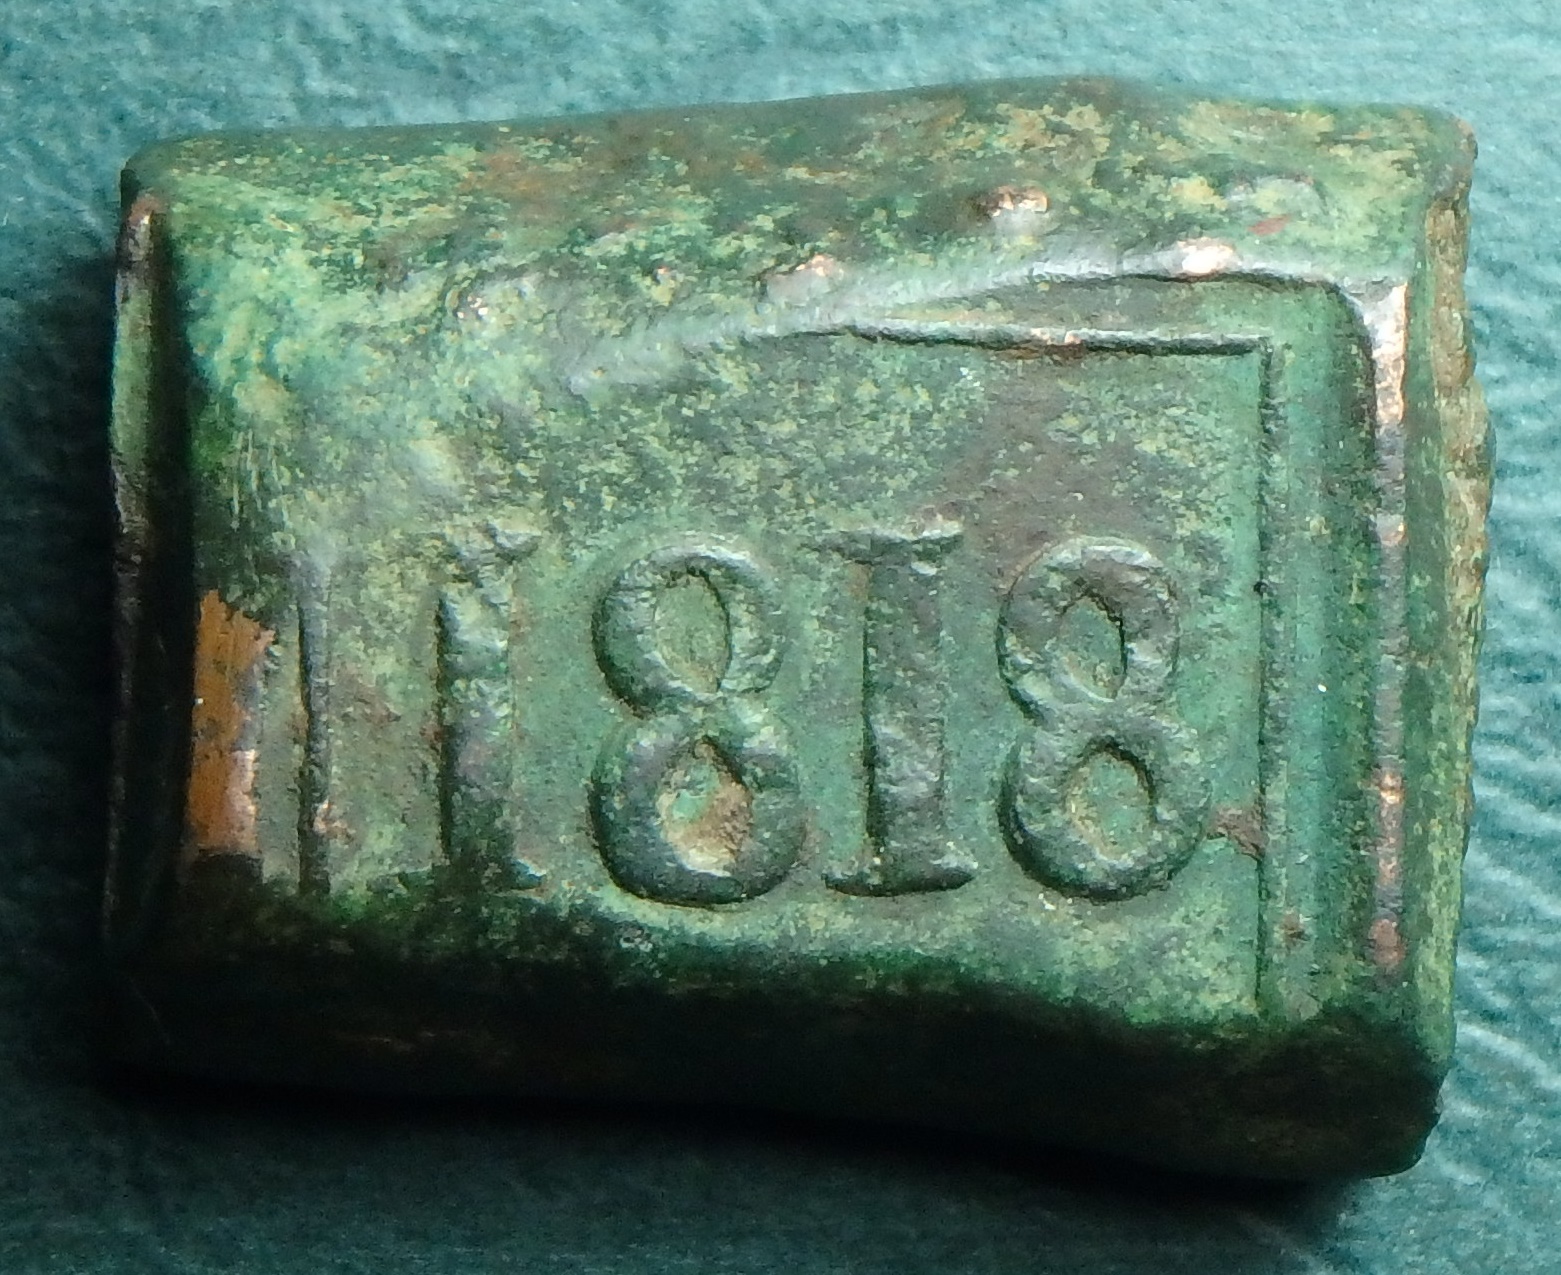 1818 NL-IND 2 s bonk rev.JPG